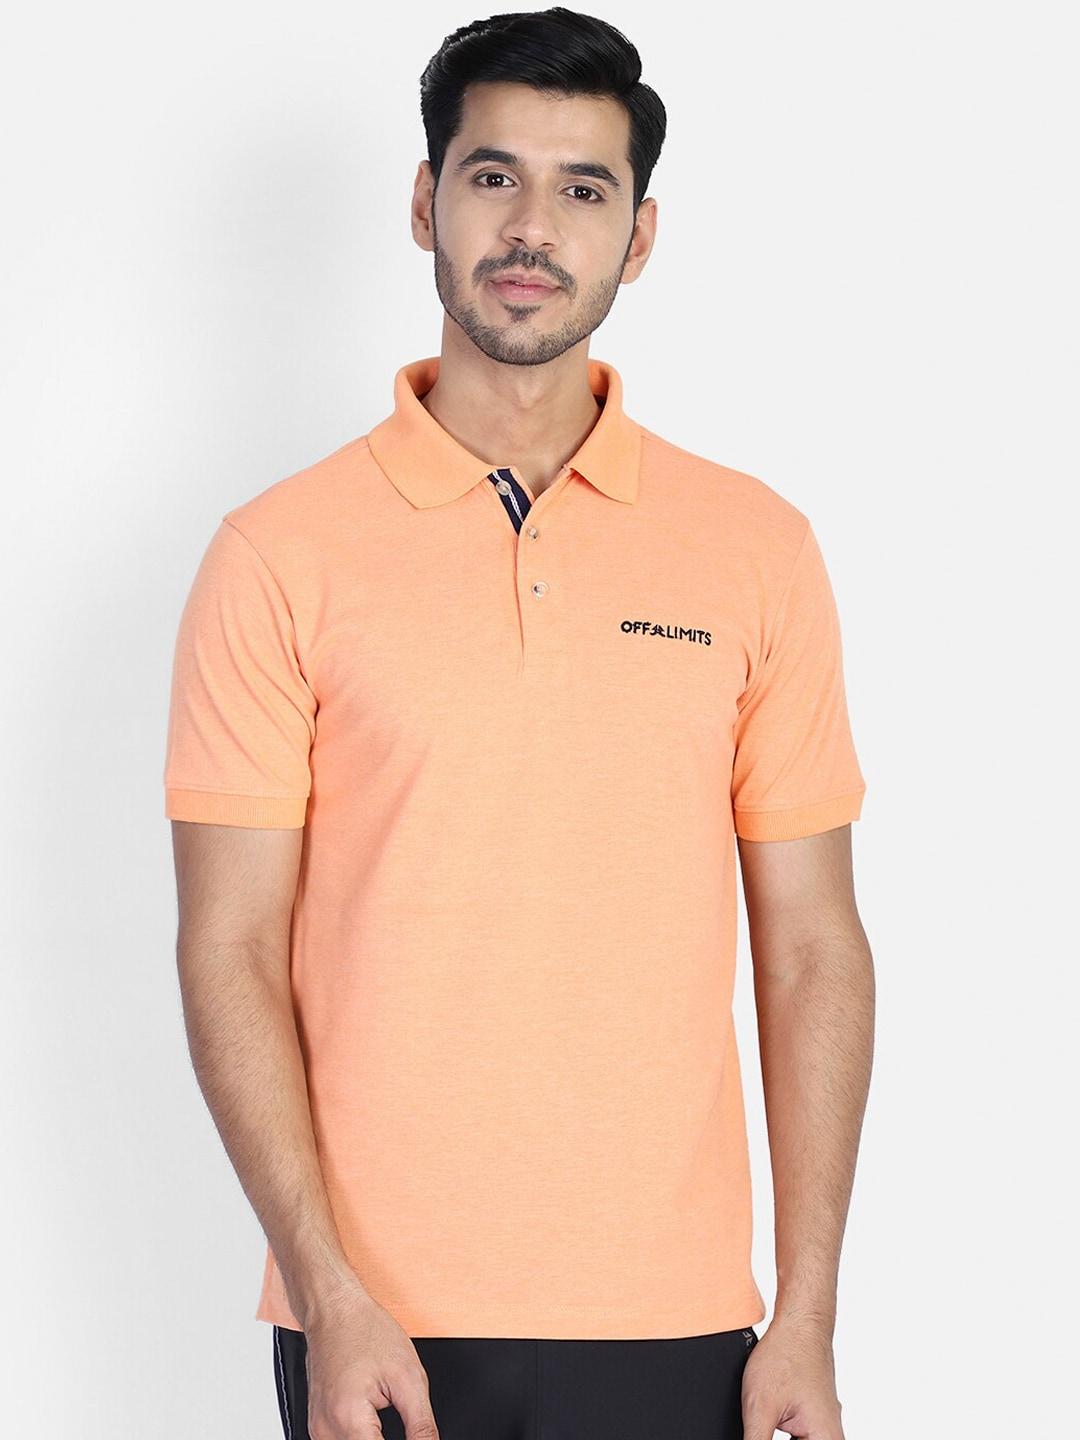 off-limits-men-orange-solid-polo-collar-t-shirt